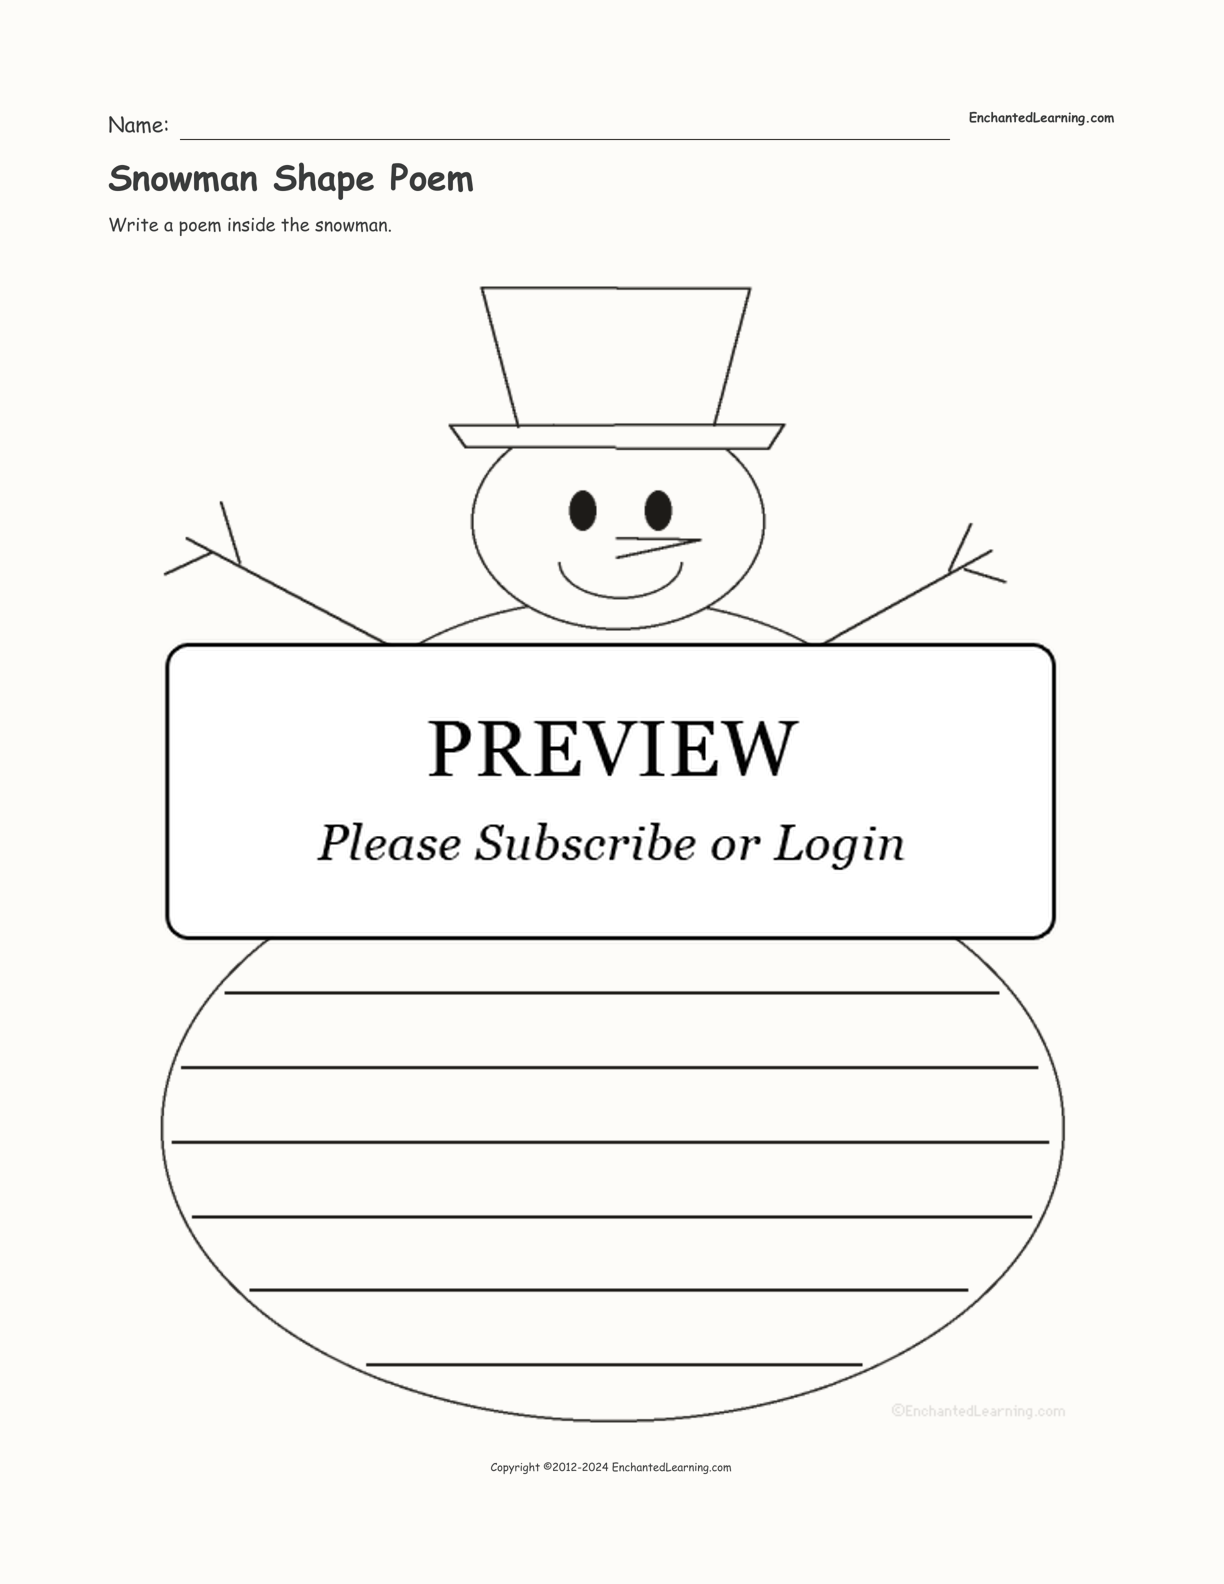 Snowman Shape Poem interactive worksheet page 1